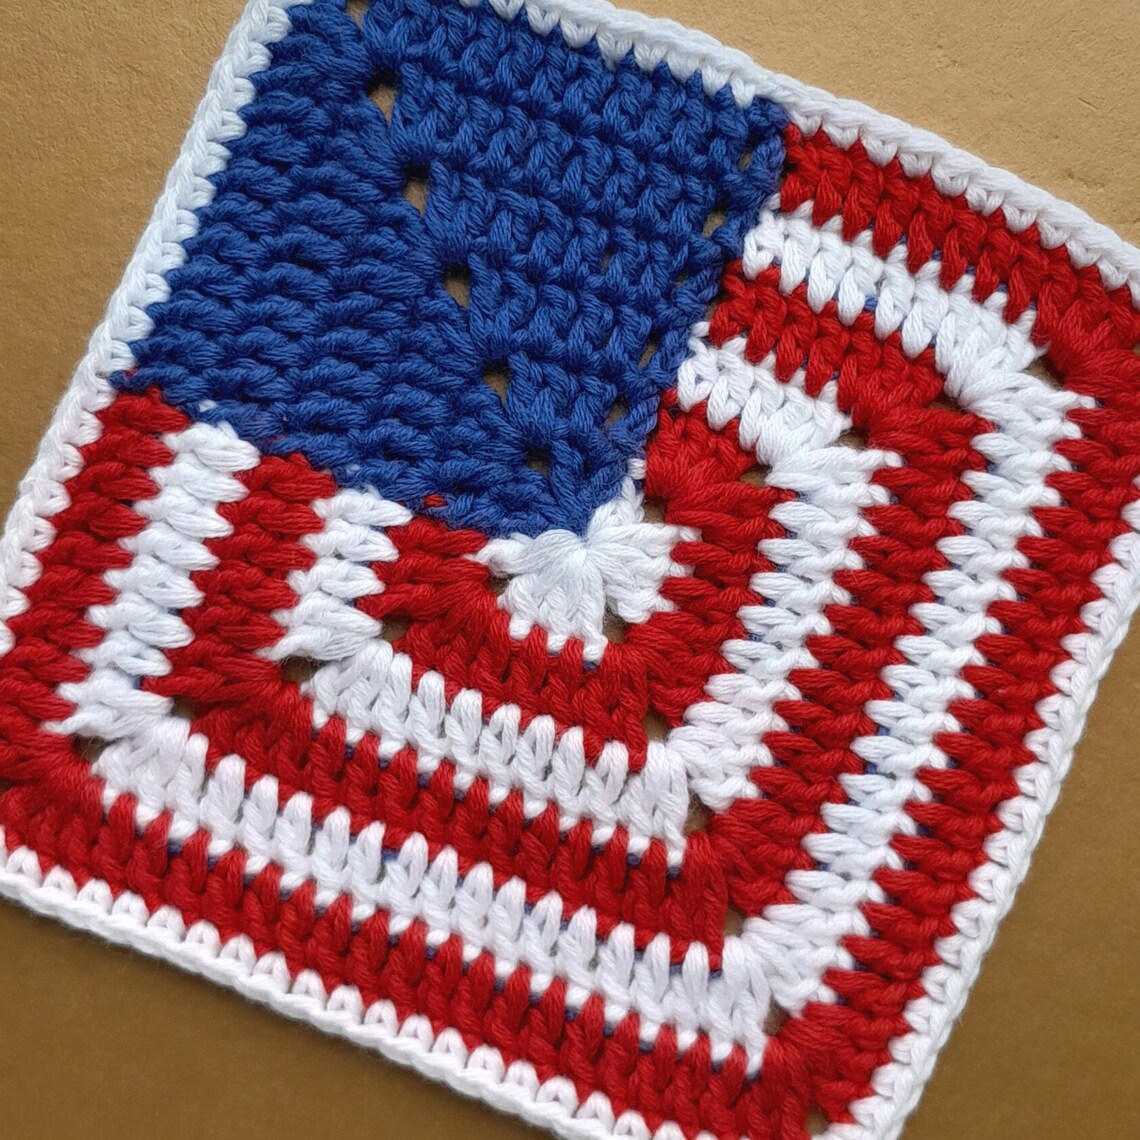 Granny Square American Flag Pattern, Patriotic Granny Square Pattern
etsy.com/listing/168480…

#Etsy #EtsyShop #EtsySeller #EtsySocial #crochet #GrannySquarePattern #crochetpattern #CrochetPatterns #grannysquare #grannysquares #crocheter #crocheting #crochetideas